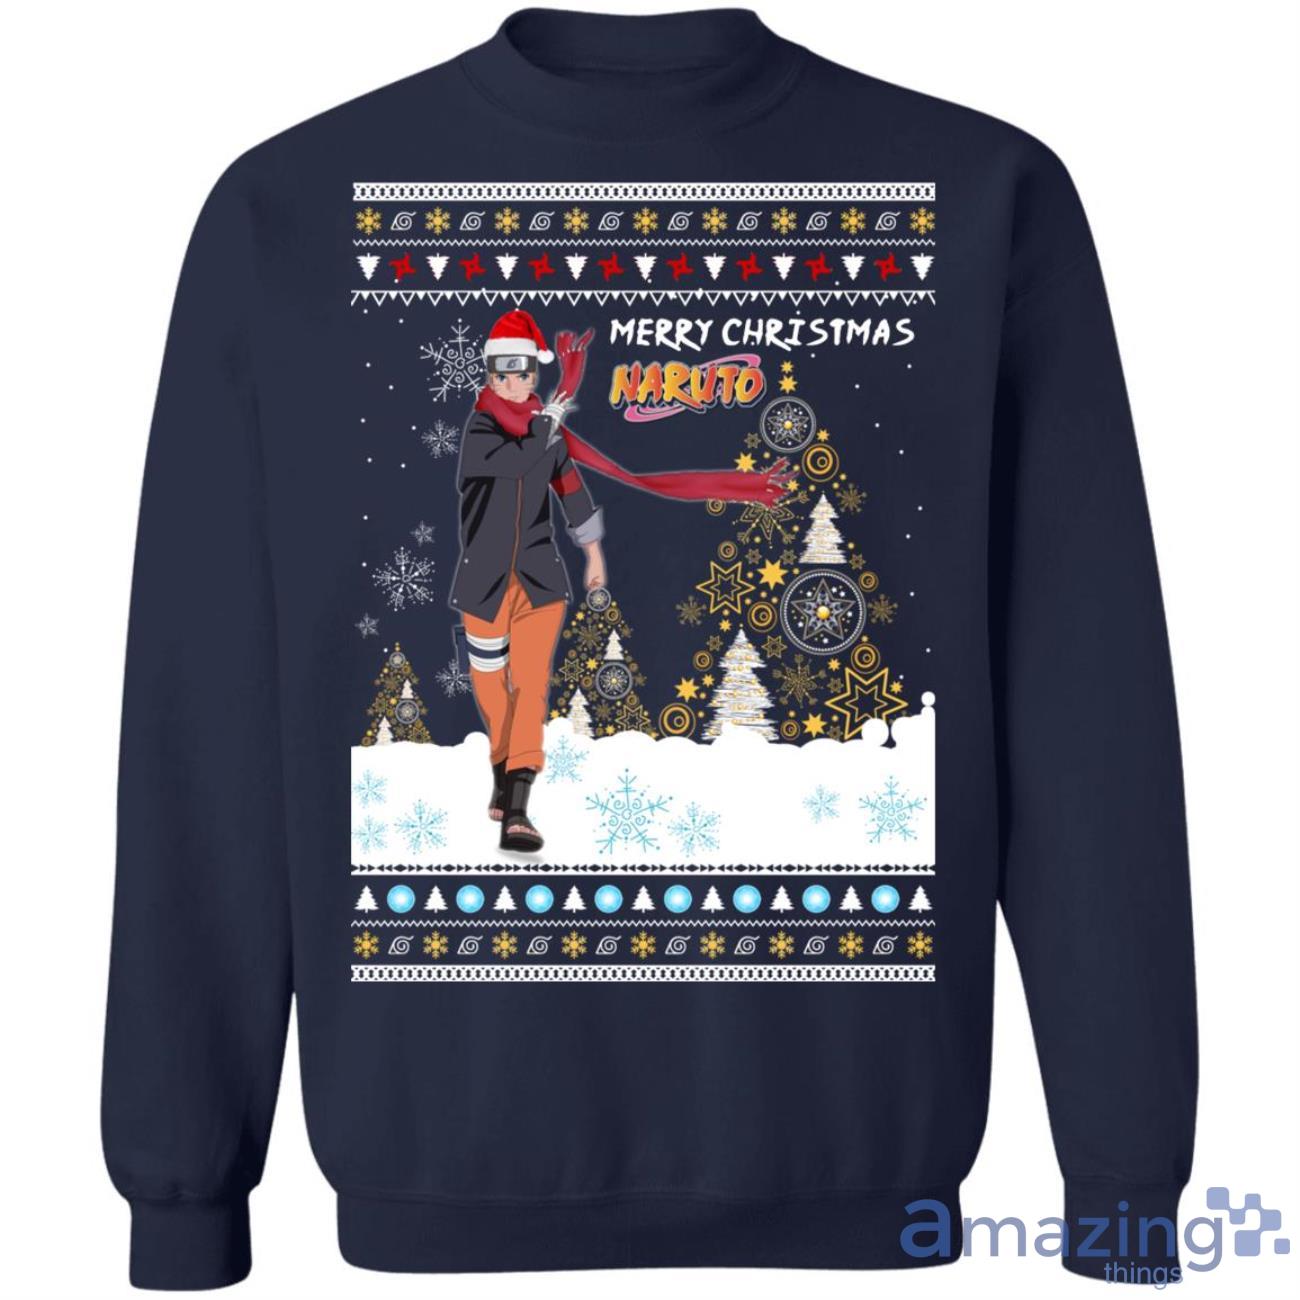 Merry Christmas Naruto The Last Naruto Shippuden Anime Sweatshirt Product Photo 1